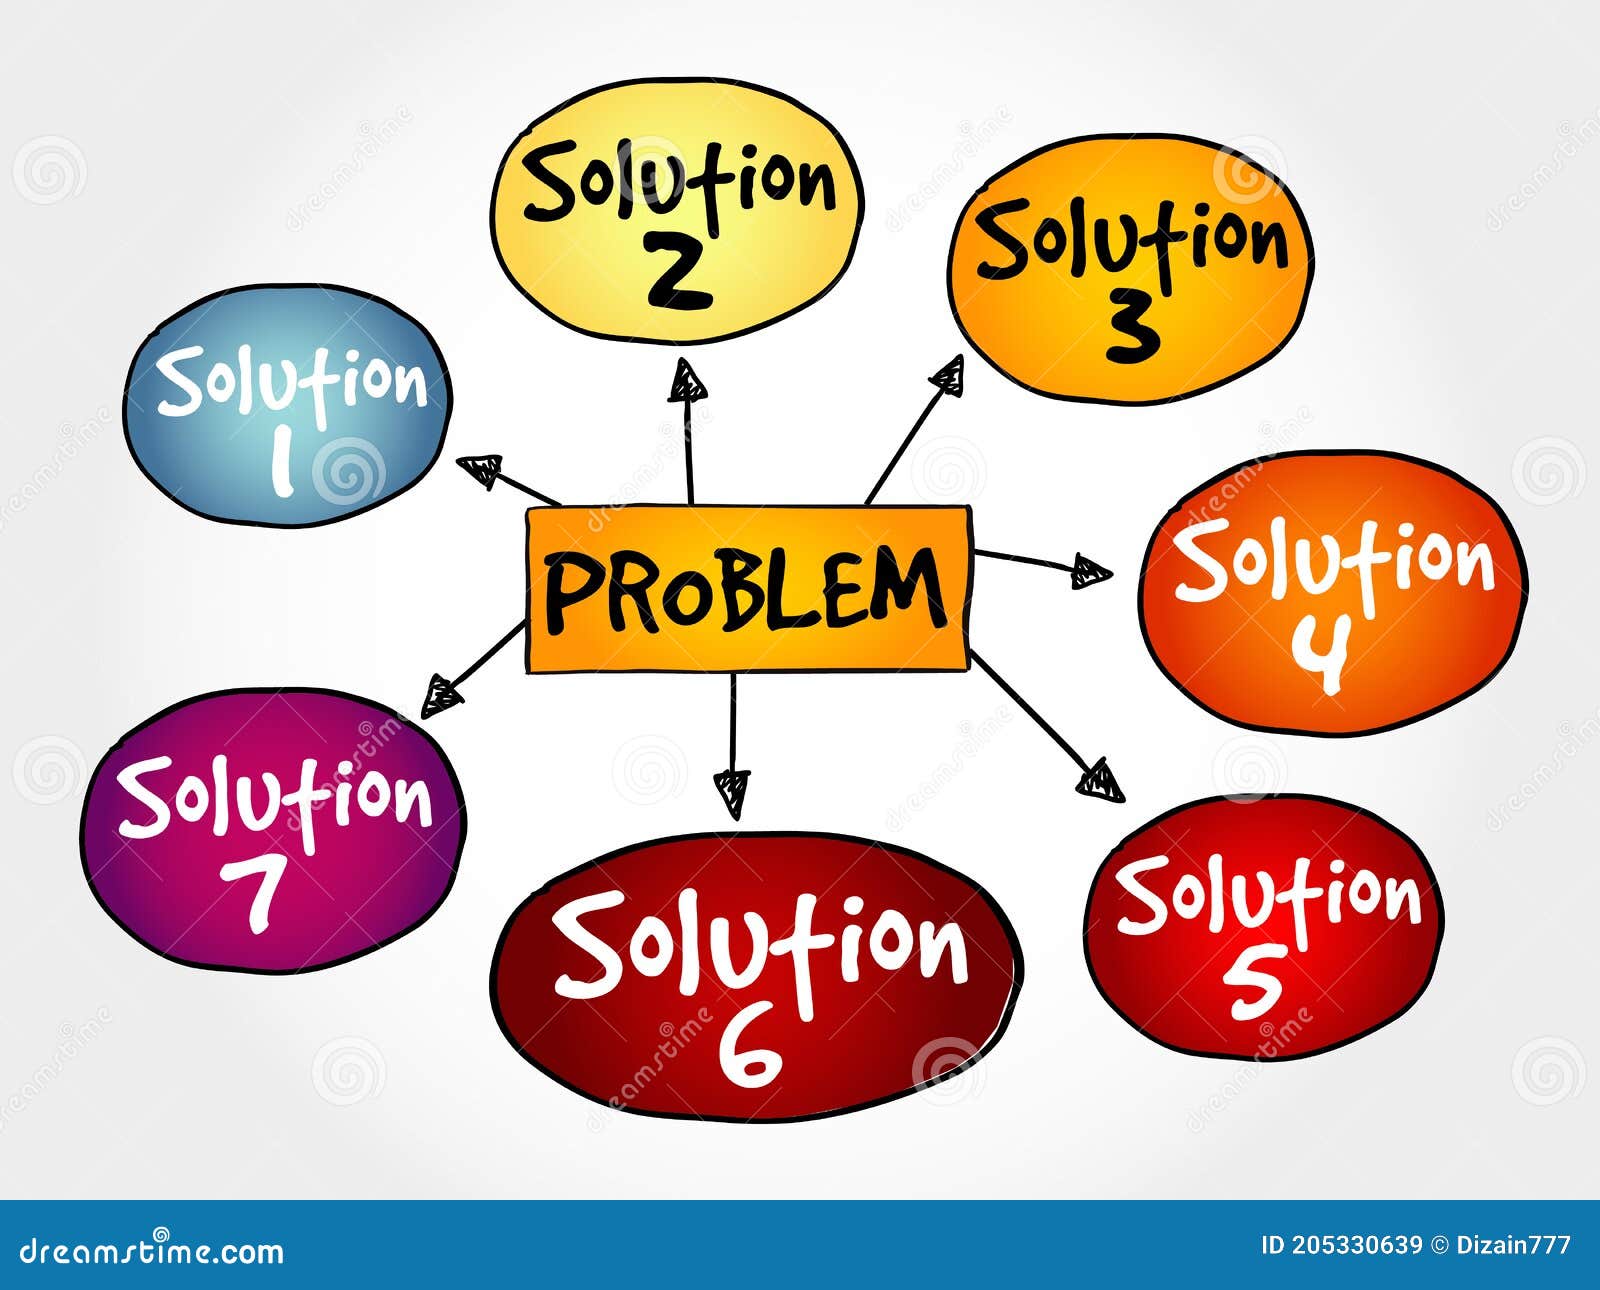 Problem solved картинка. Problem solution. Problem Solver. Find a solution to the problem.